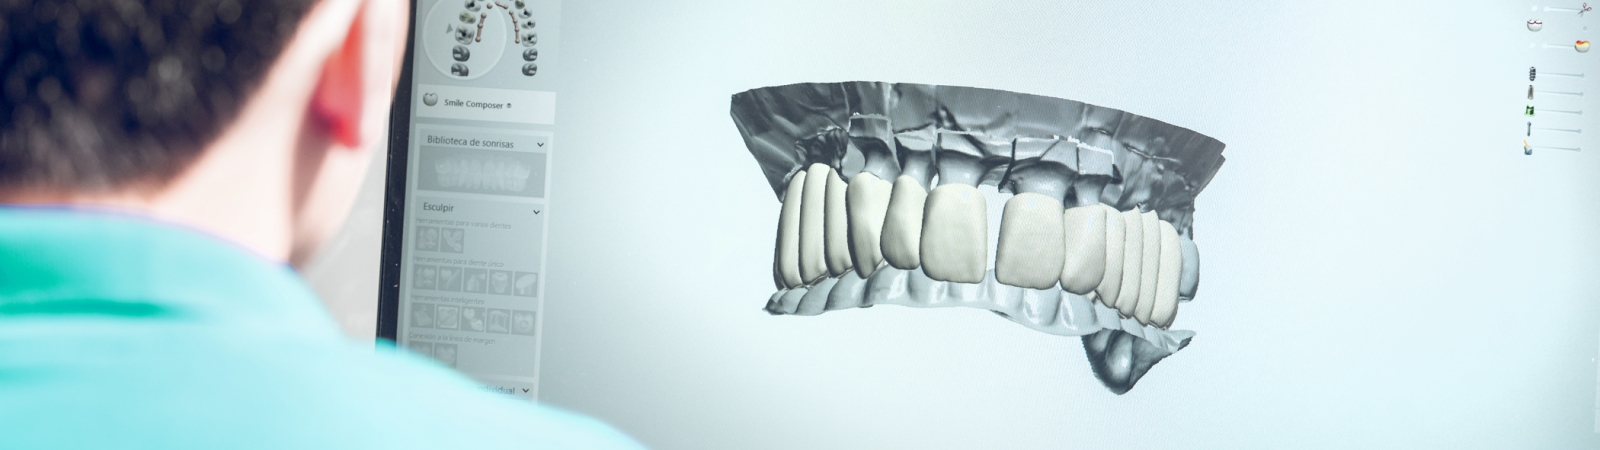 examining model of jaw implant